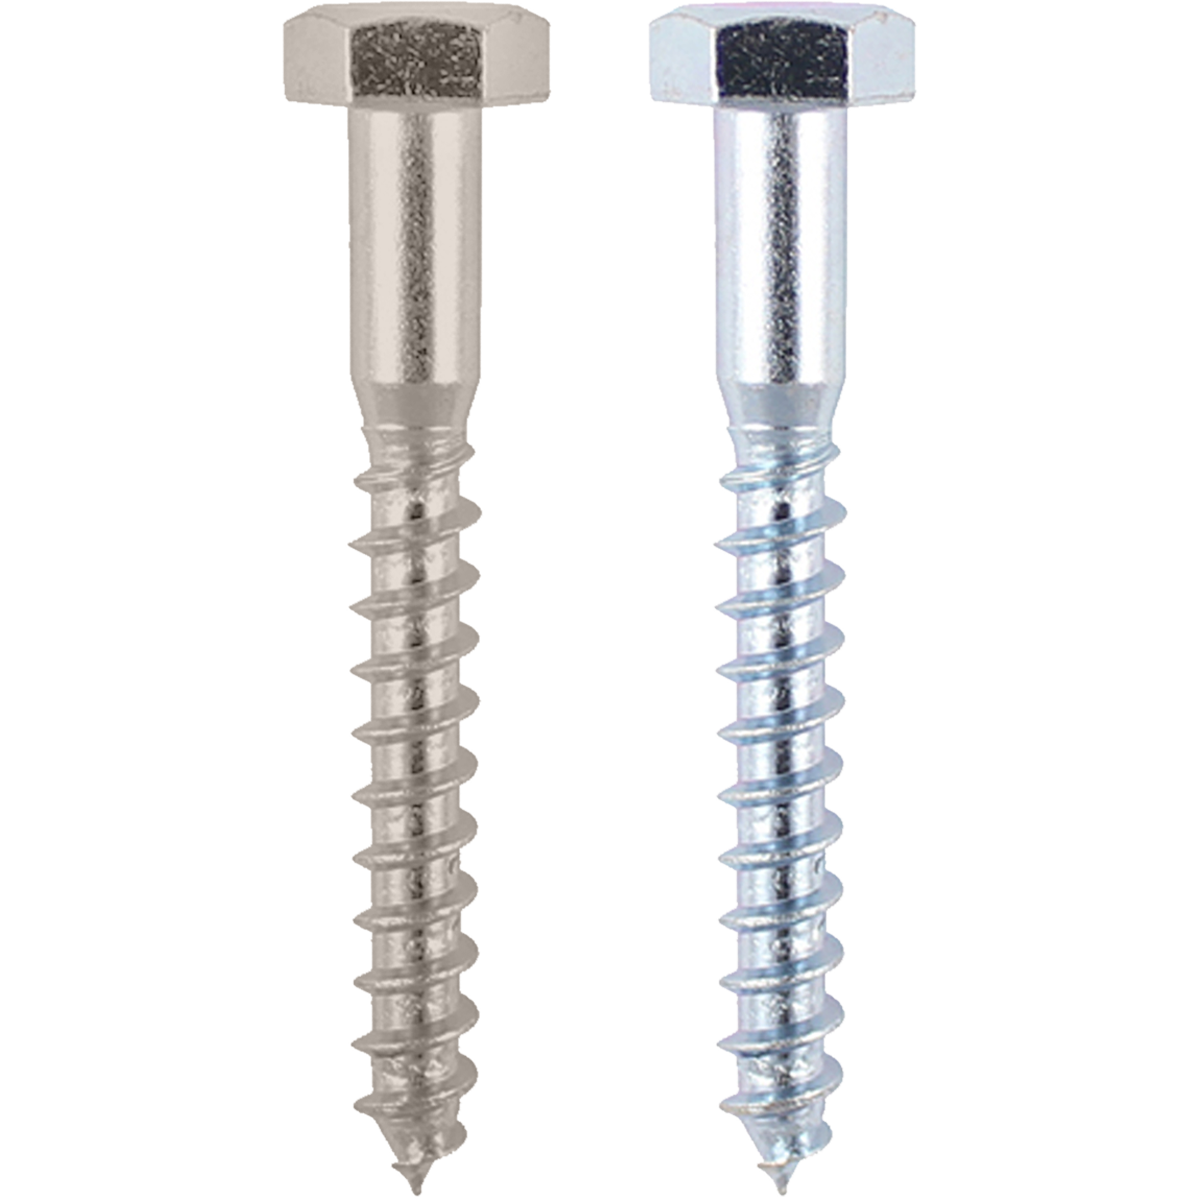 Coach screws - Hex head coach screws also known as lag screws or lag bolts which are heavy-duty wood screws 